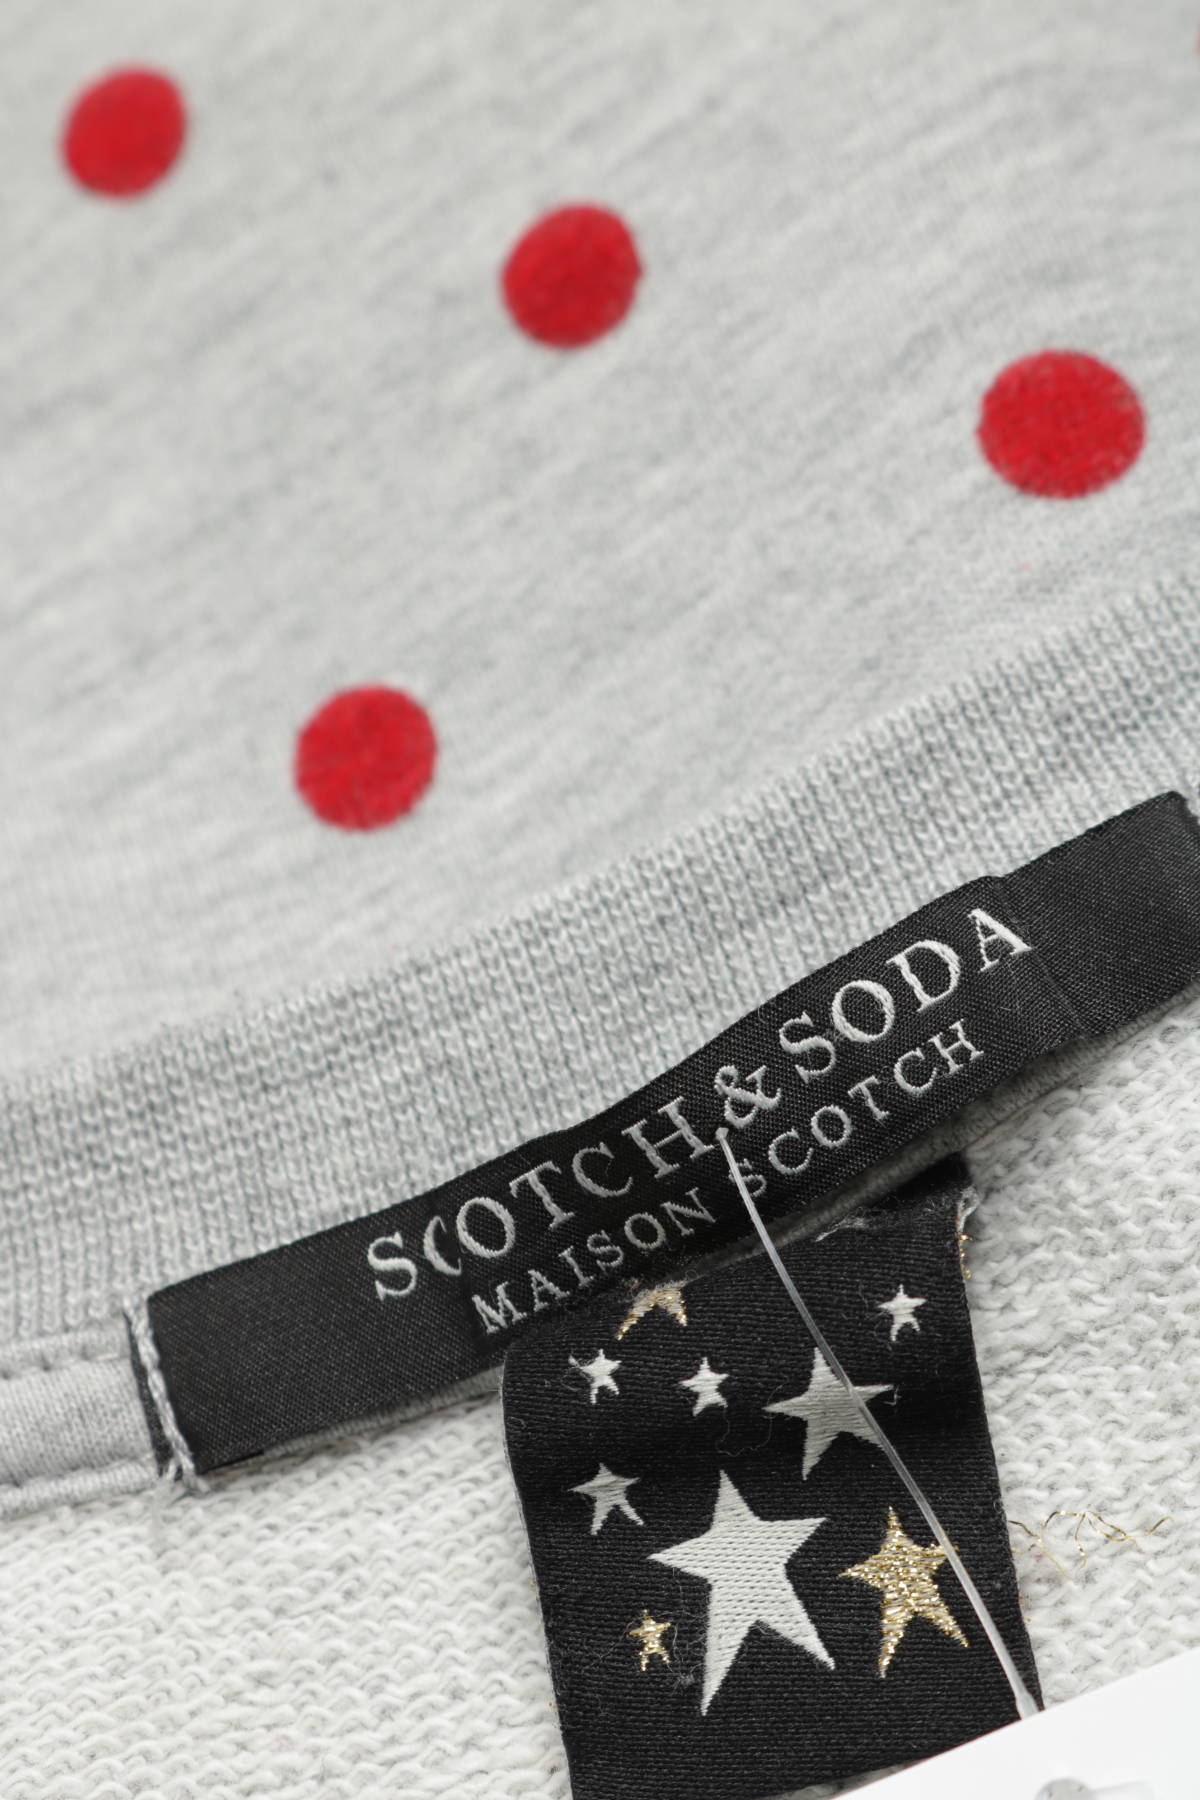 Блуза SCOTCH & SODA3